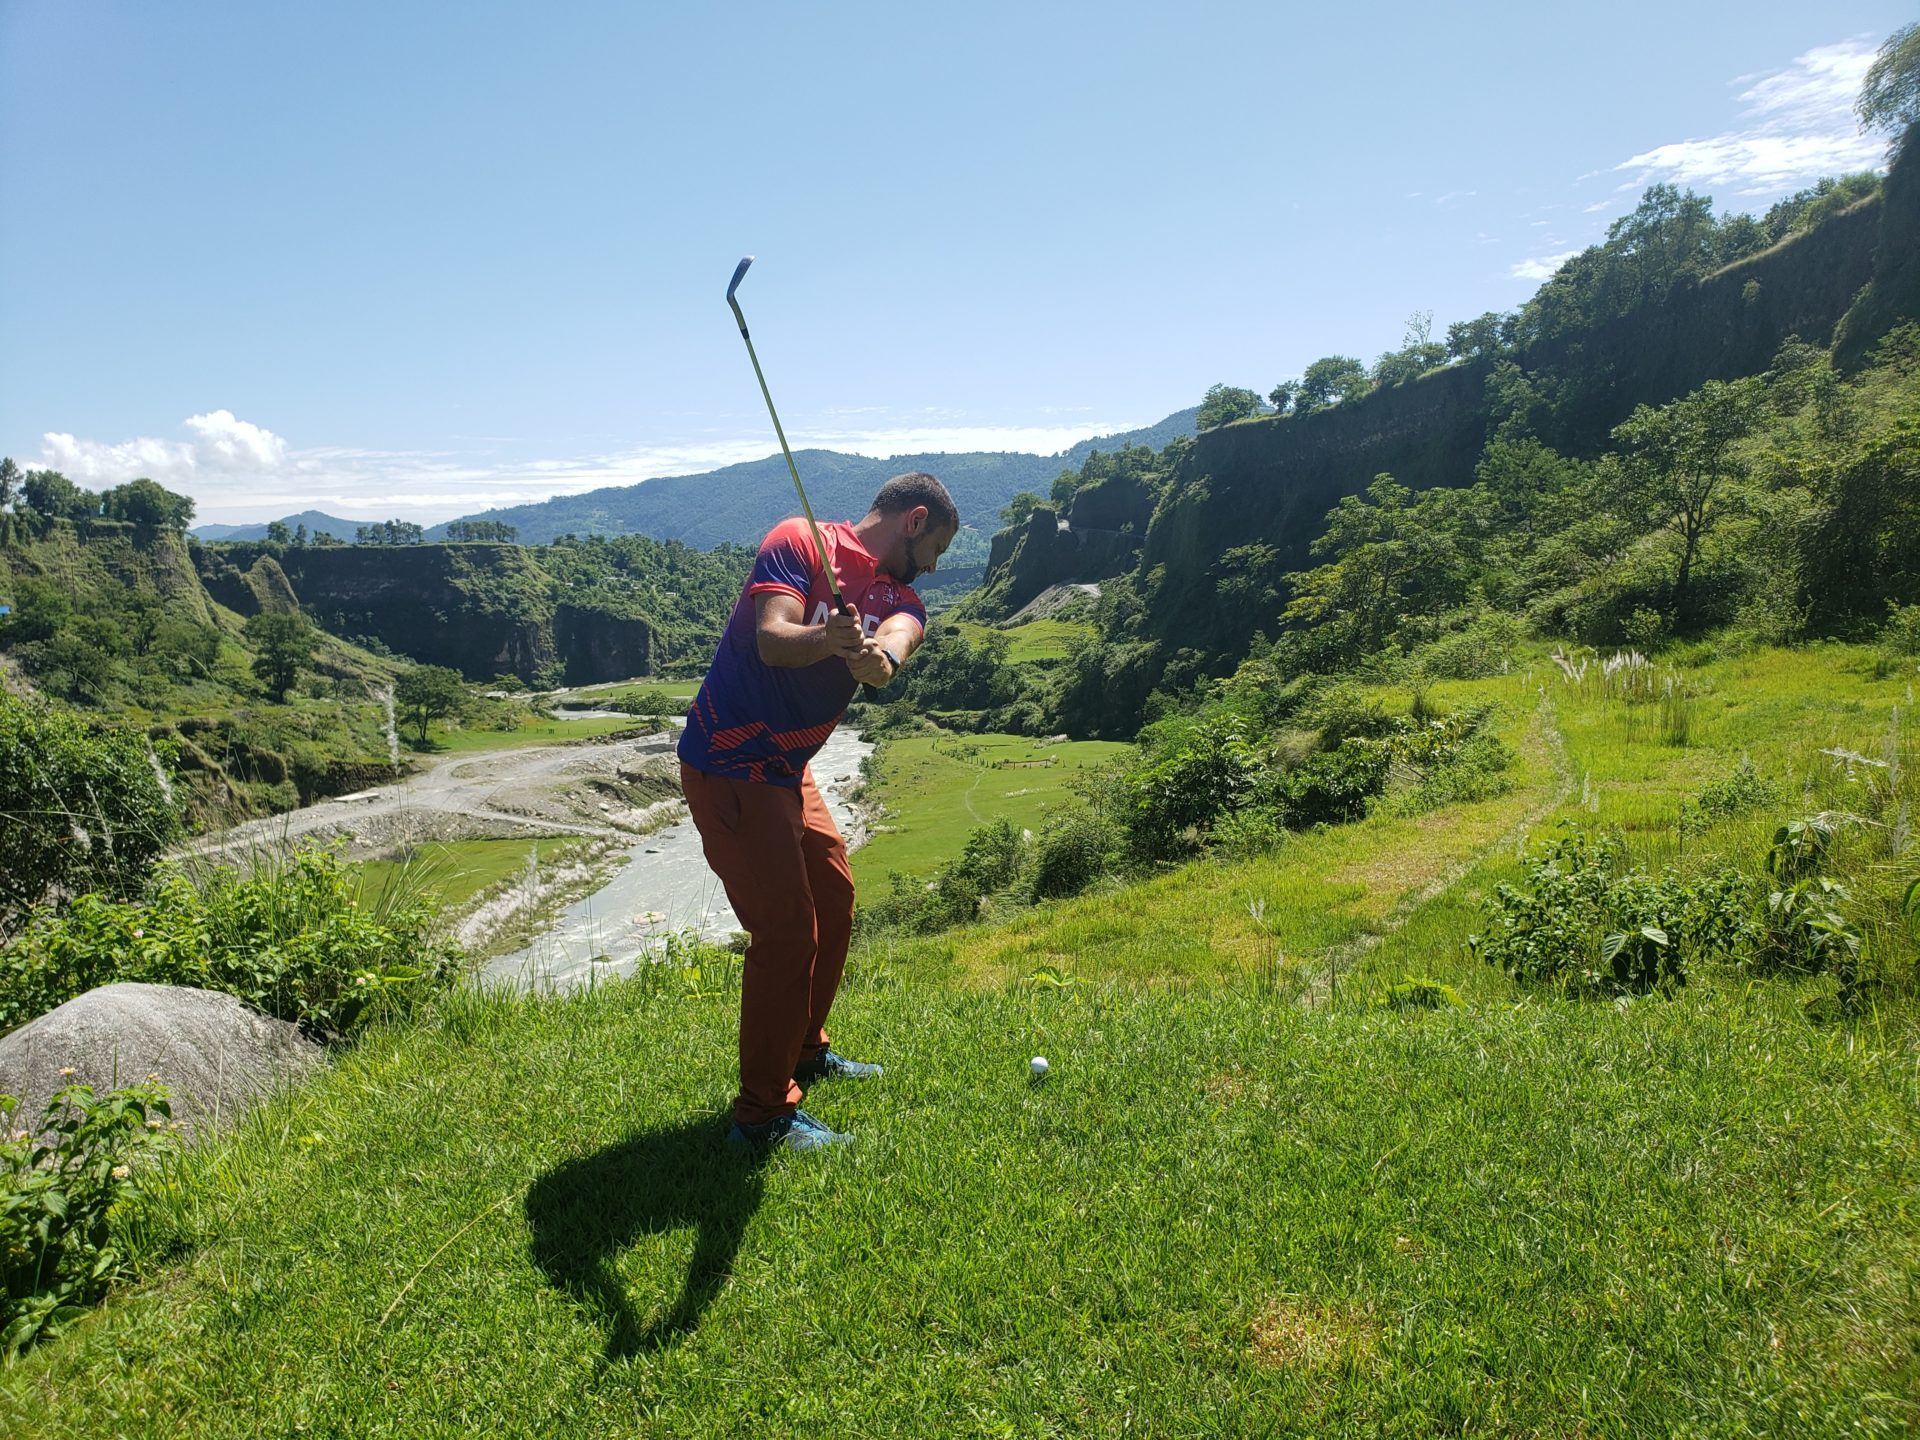 a man playing golf on a grassy hill